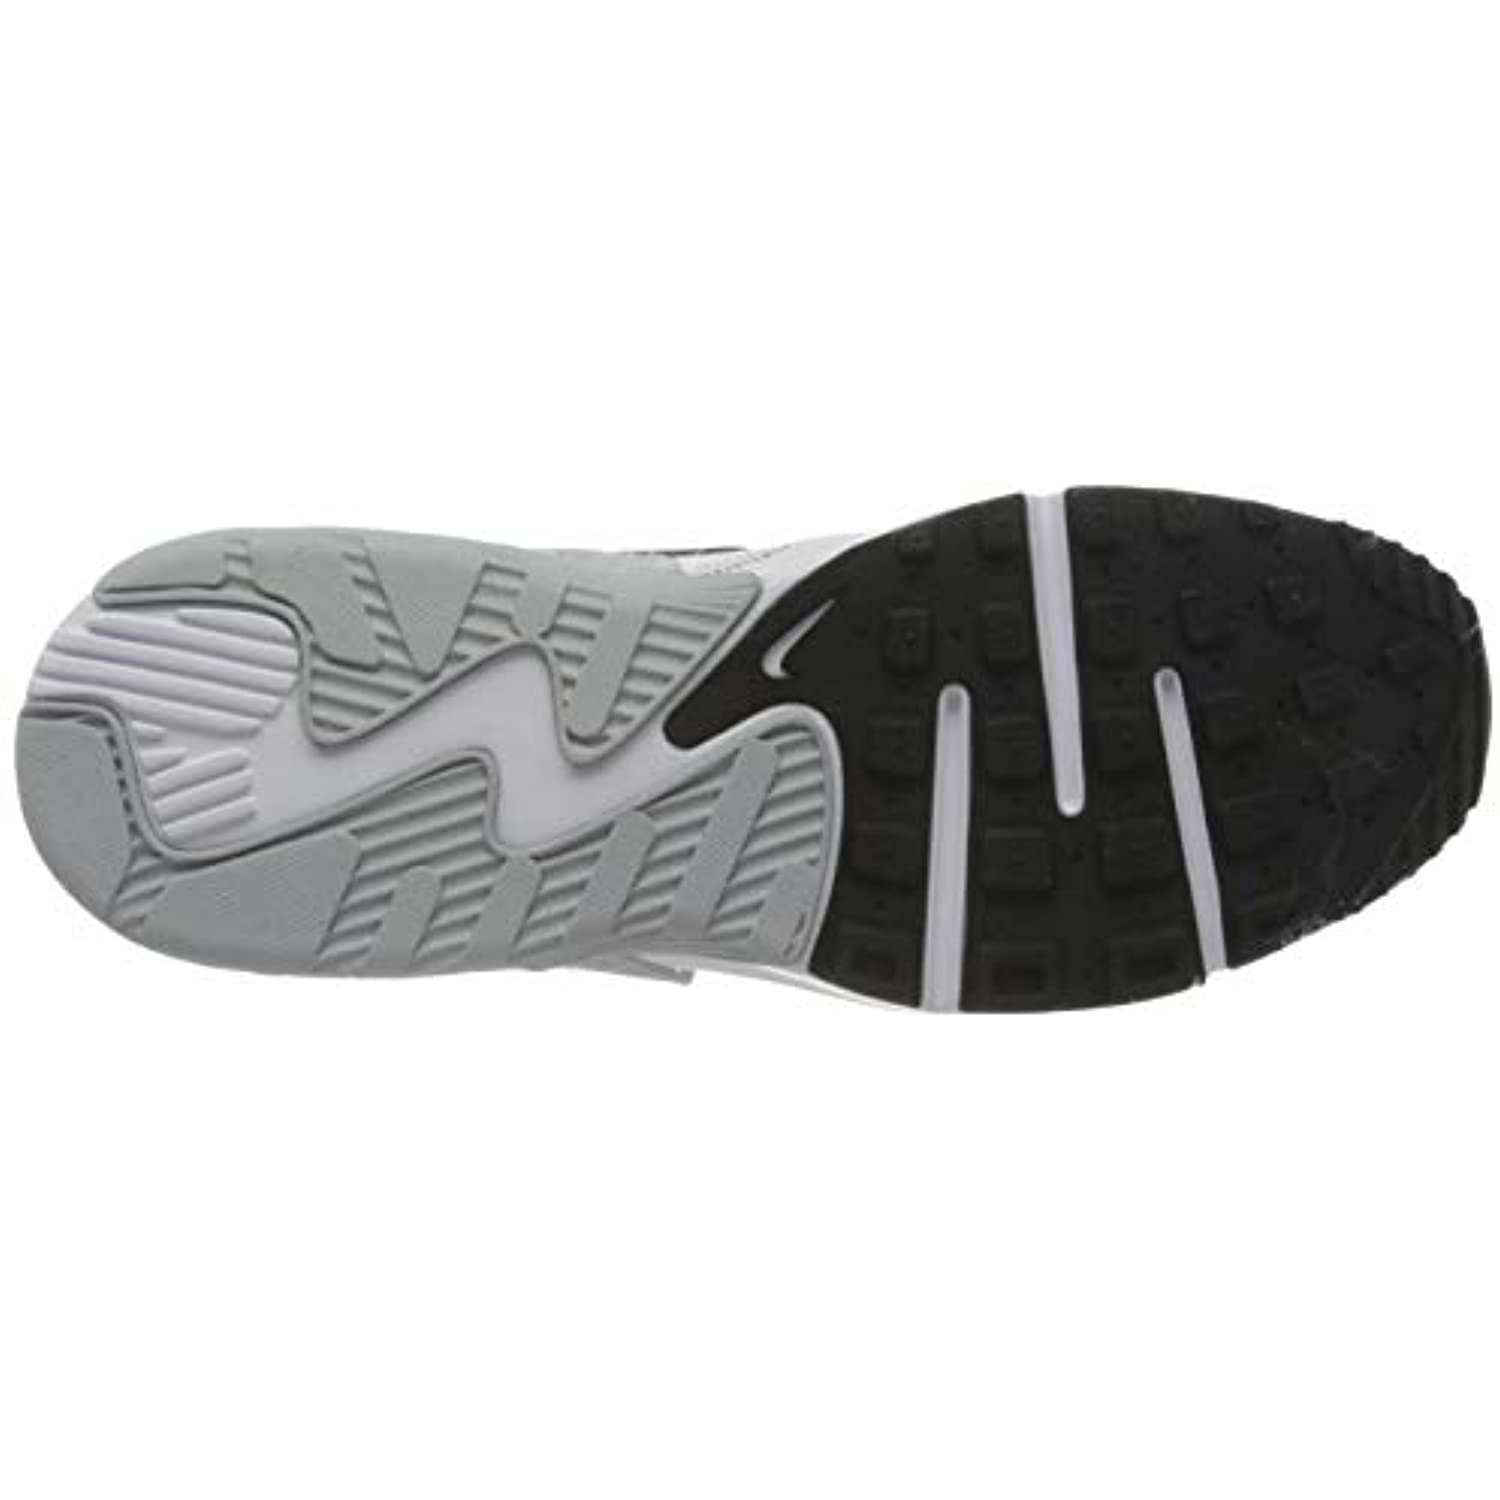 Nike Men's Air Max Excee Running Shoe, White/Black/Pure Platinum